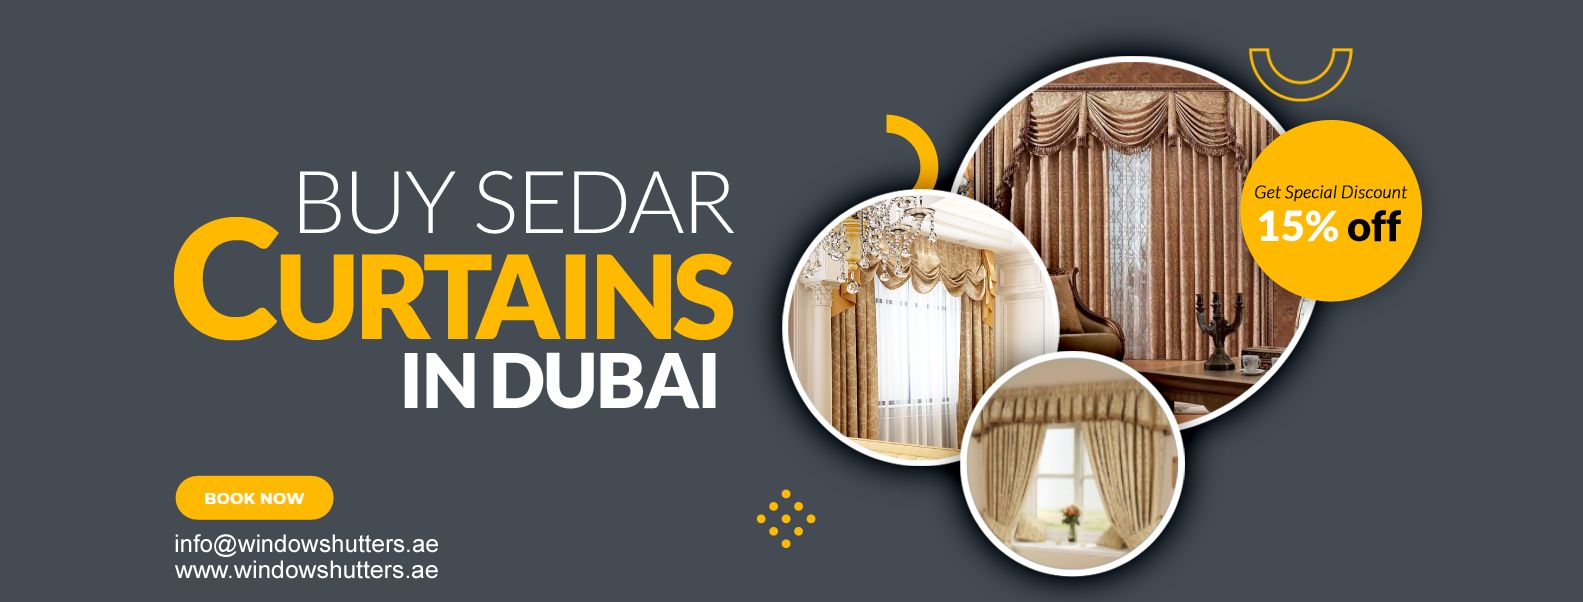 Sedar Curtains Dubai Brand New At Low